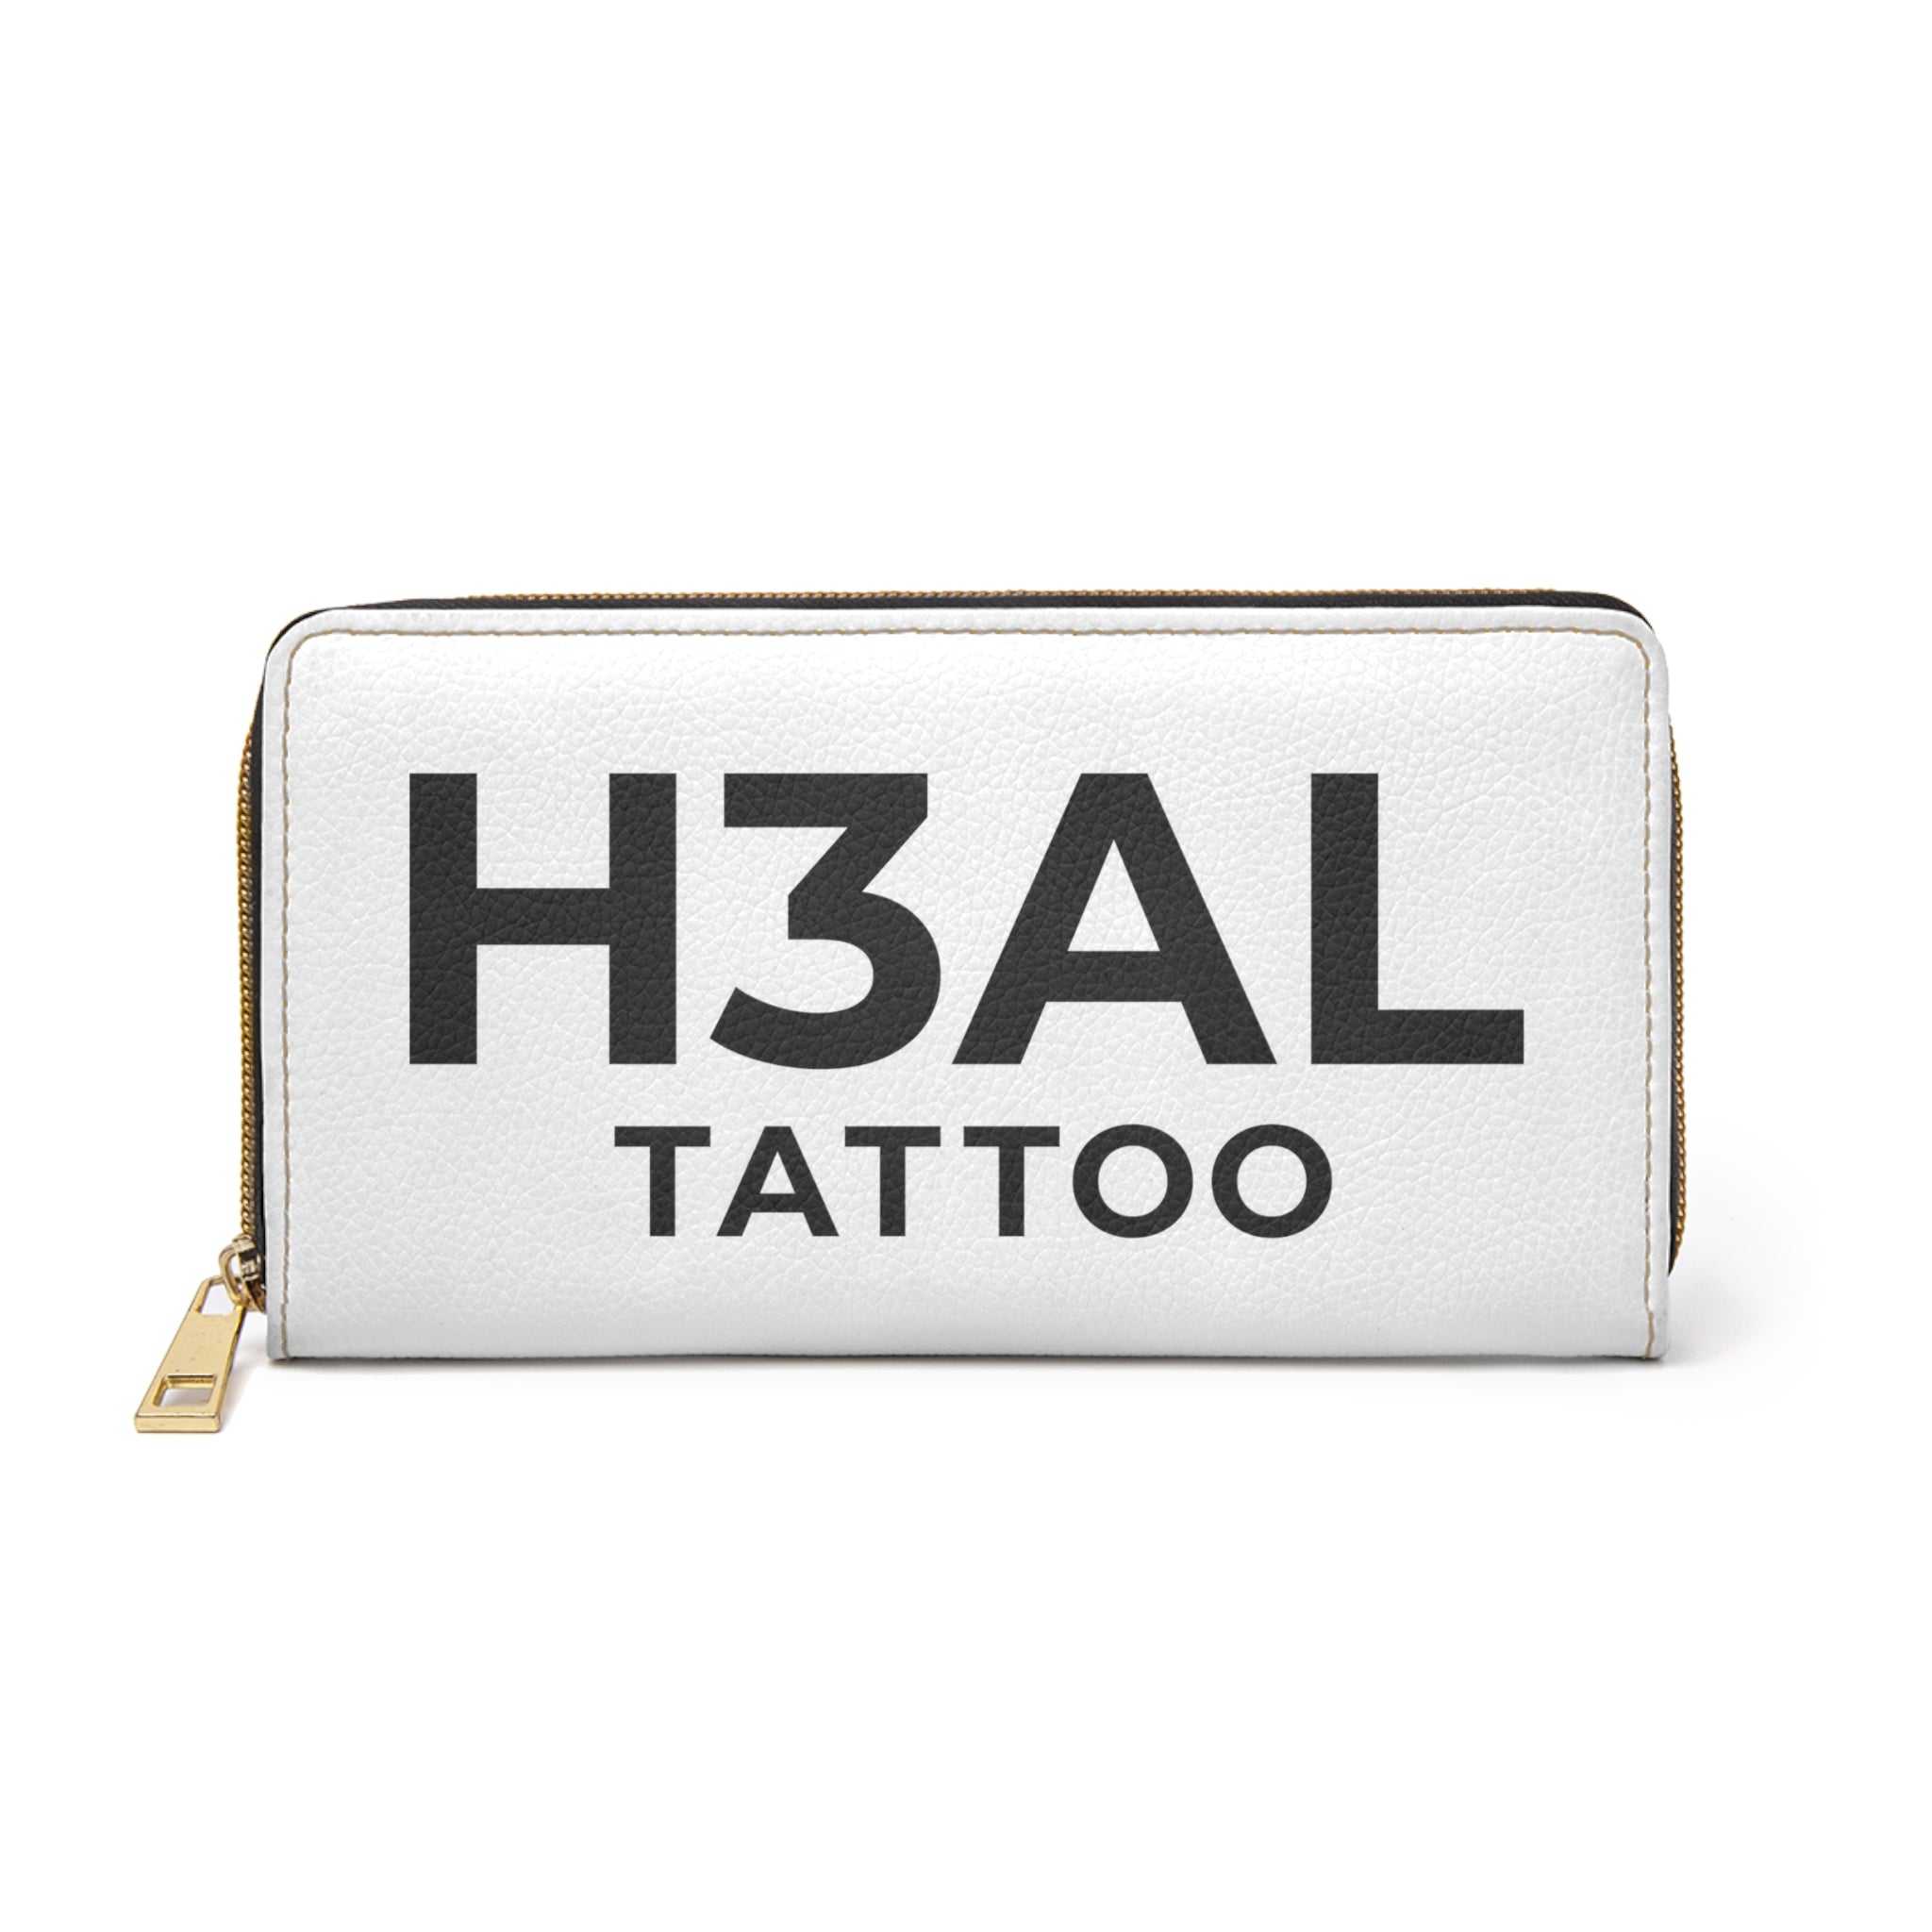 H3 AL Tattoo Zipper Wallet